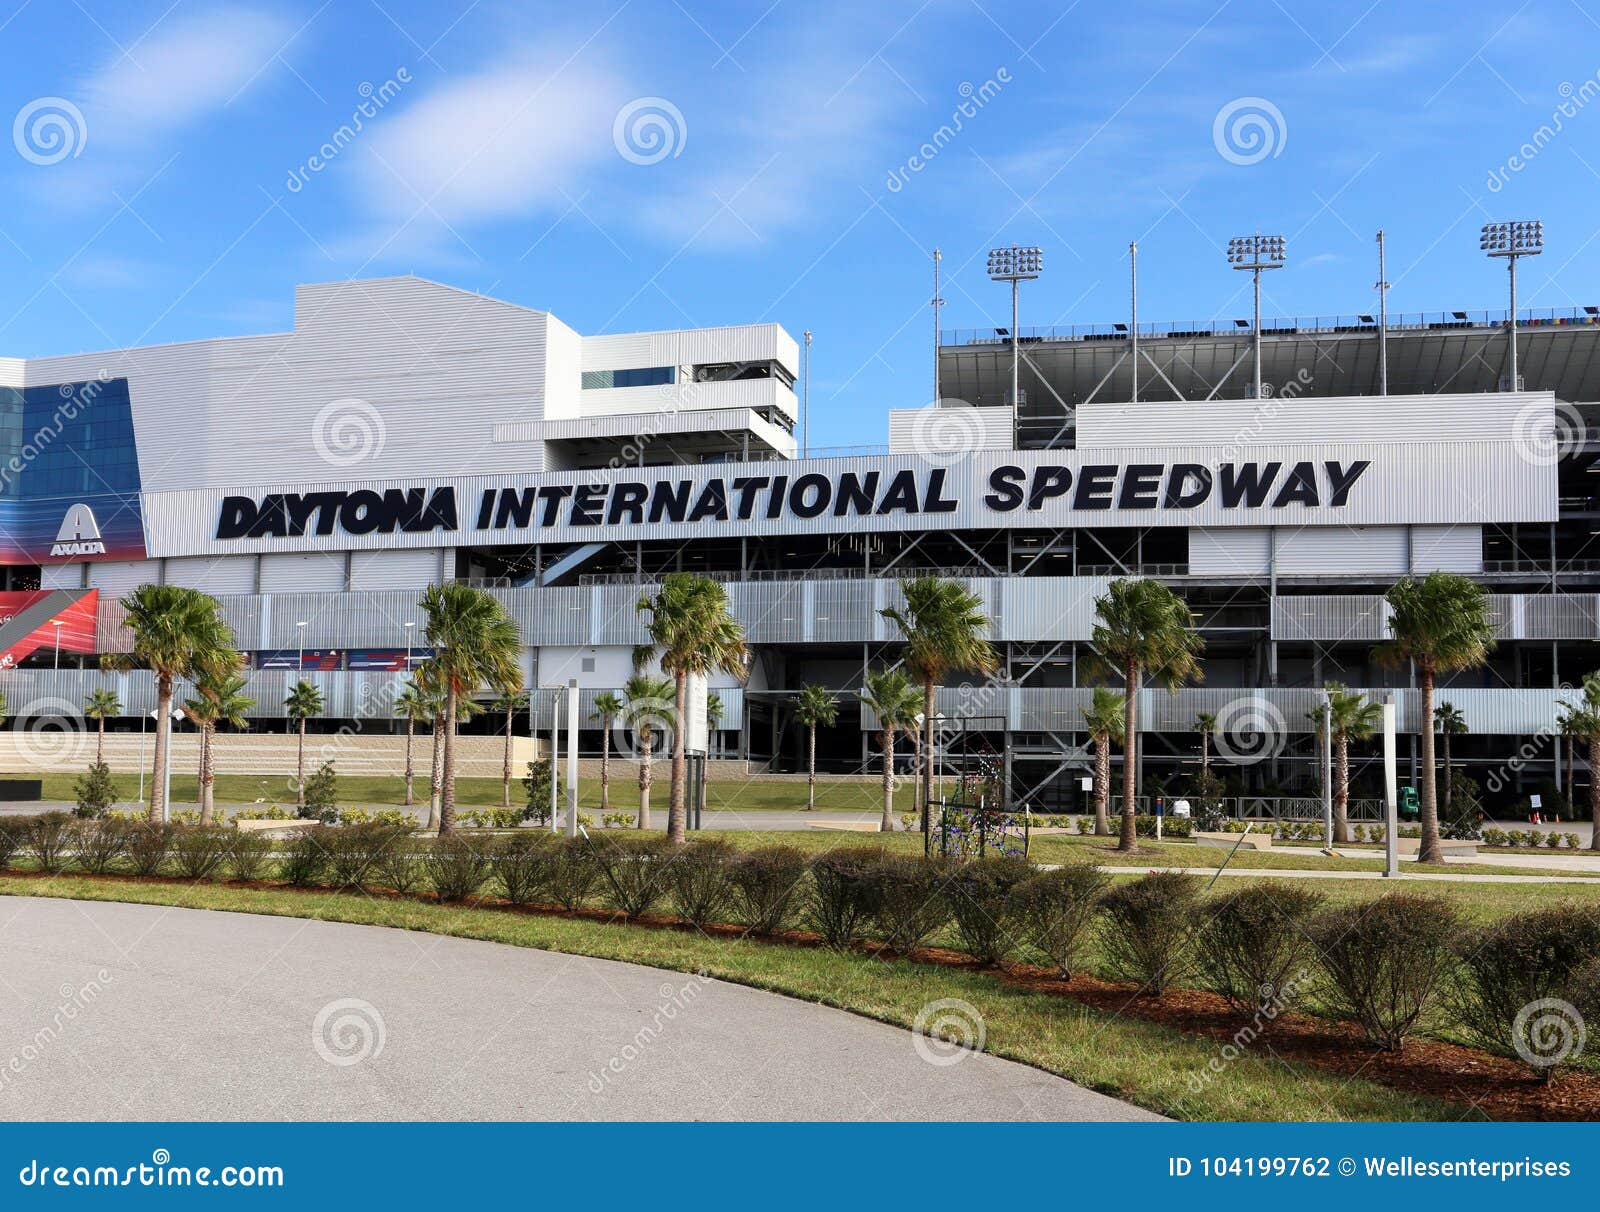 Daytona 500 Seating Chart 2017